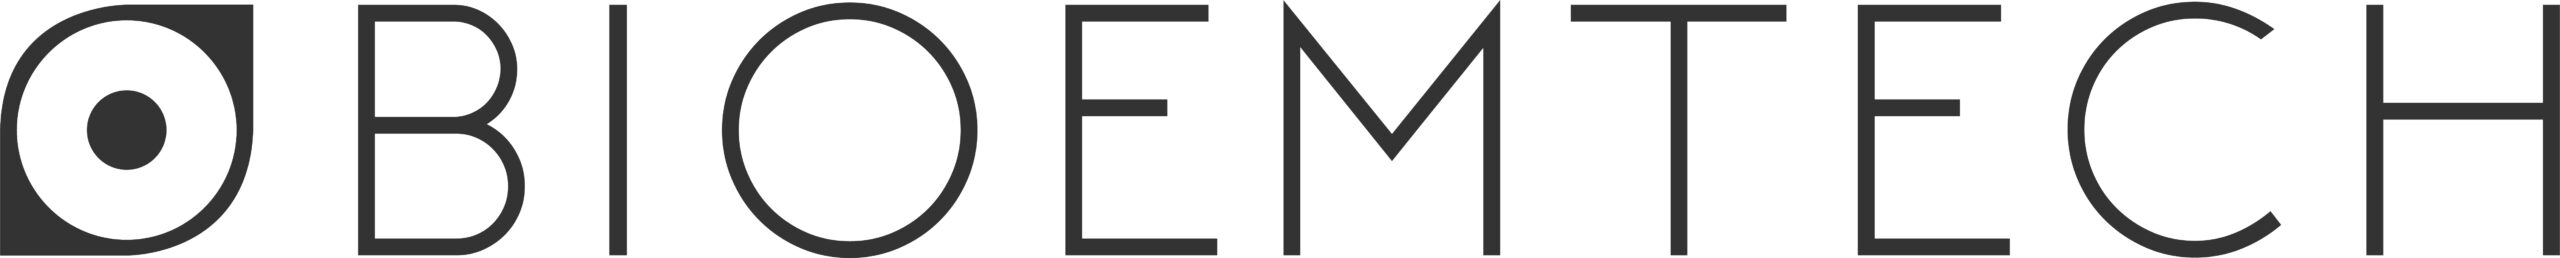 BIOEMTECH Logo